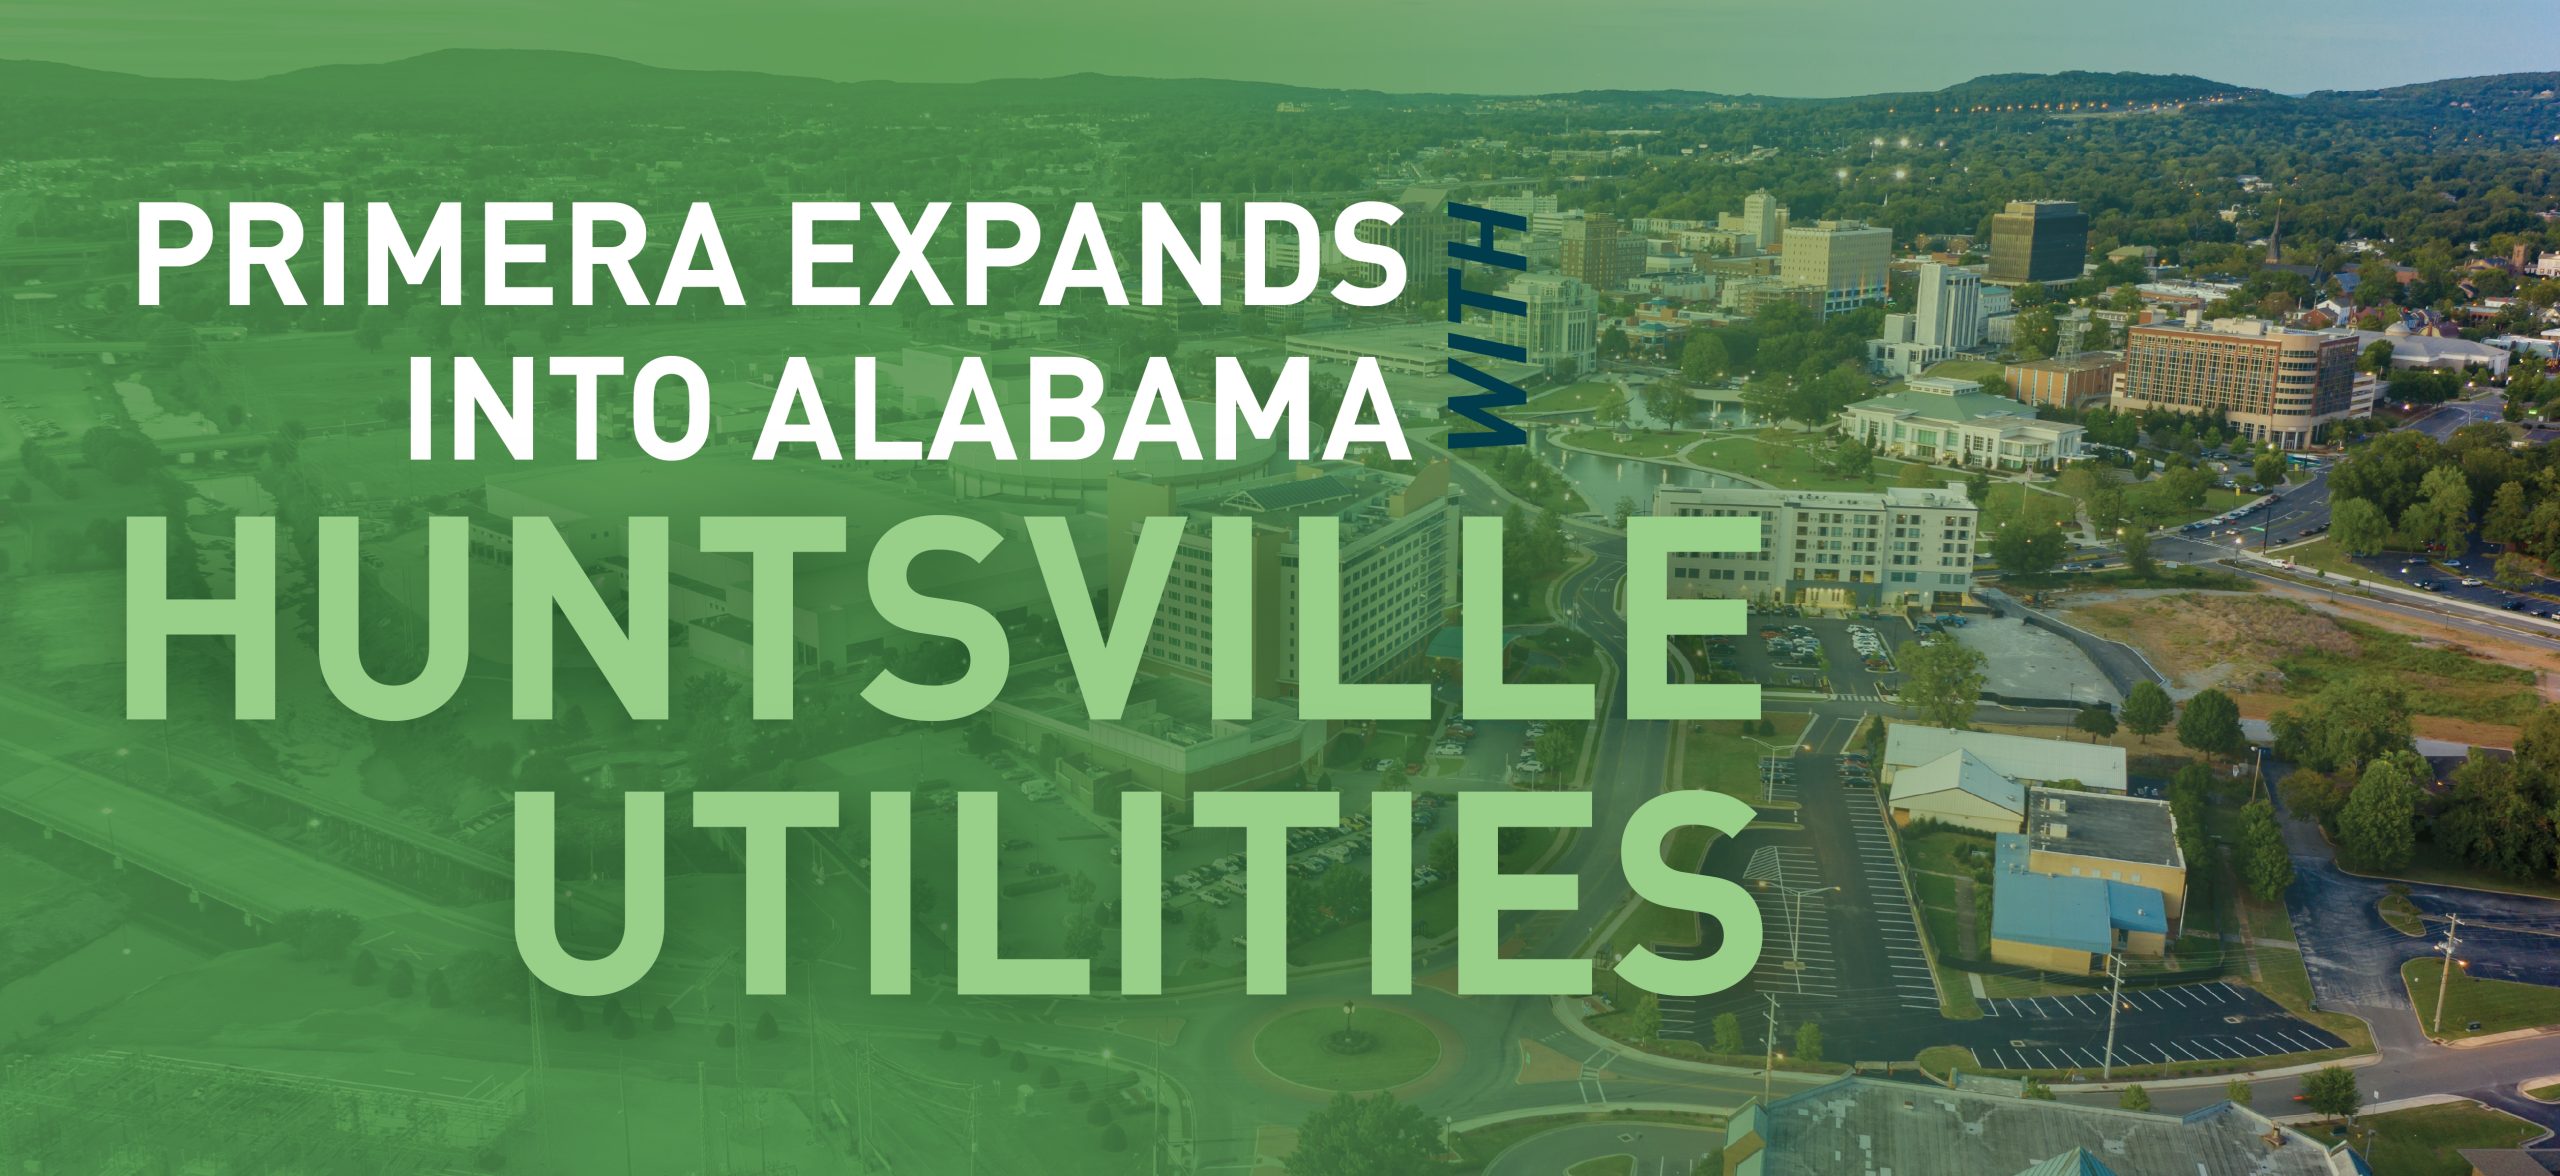 Primera Expands into Alabama with Huntsville Utilities